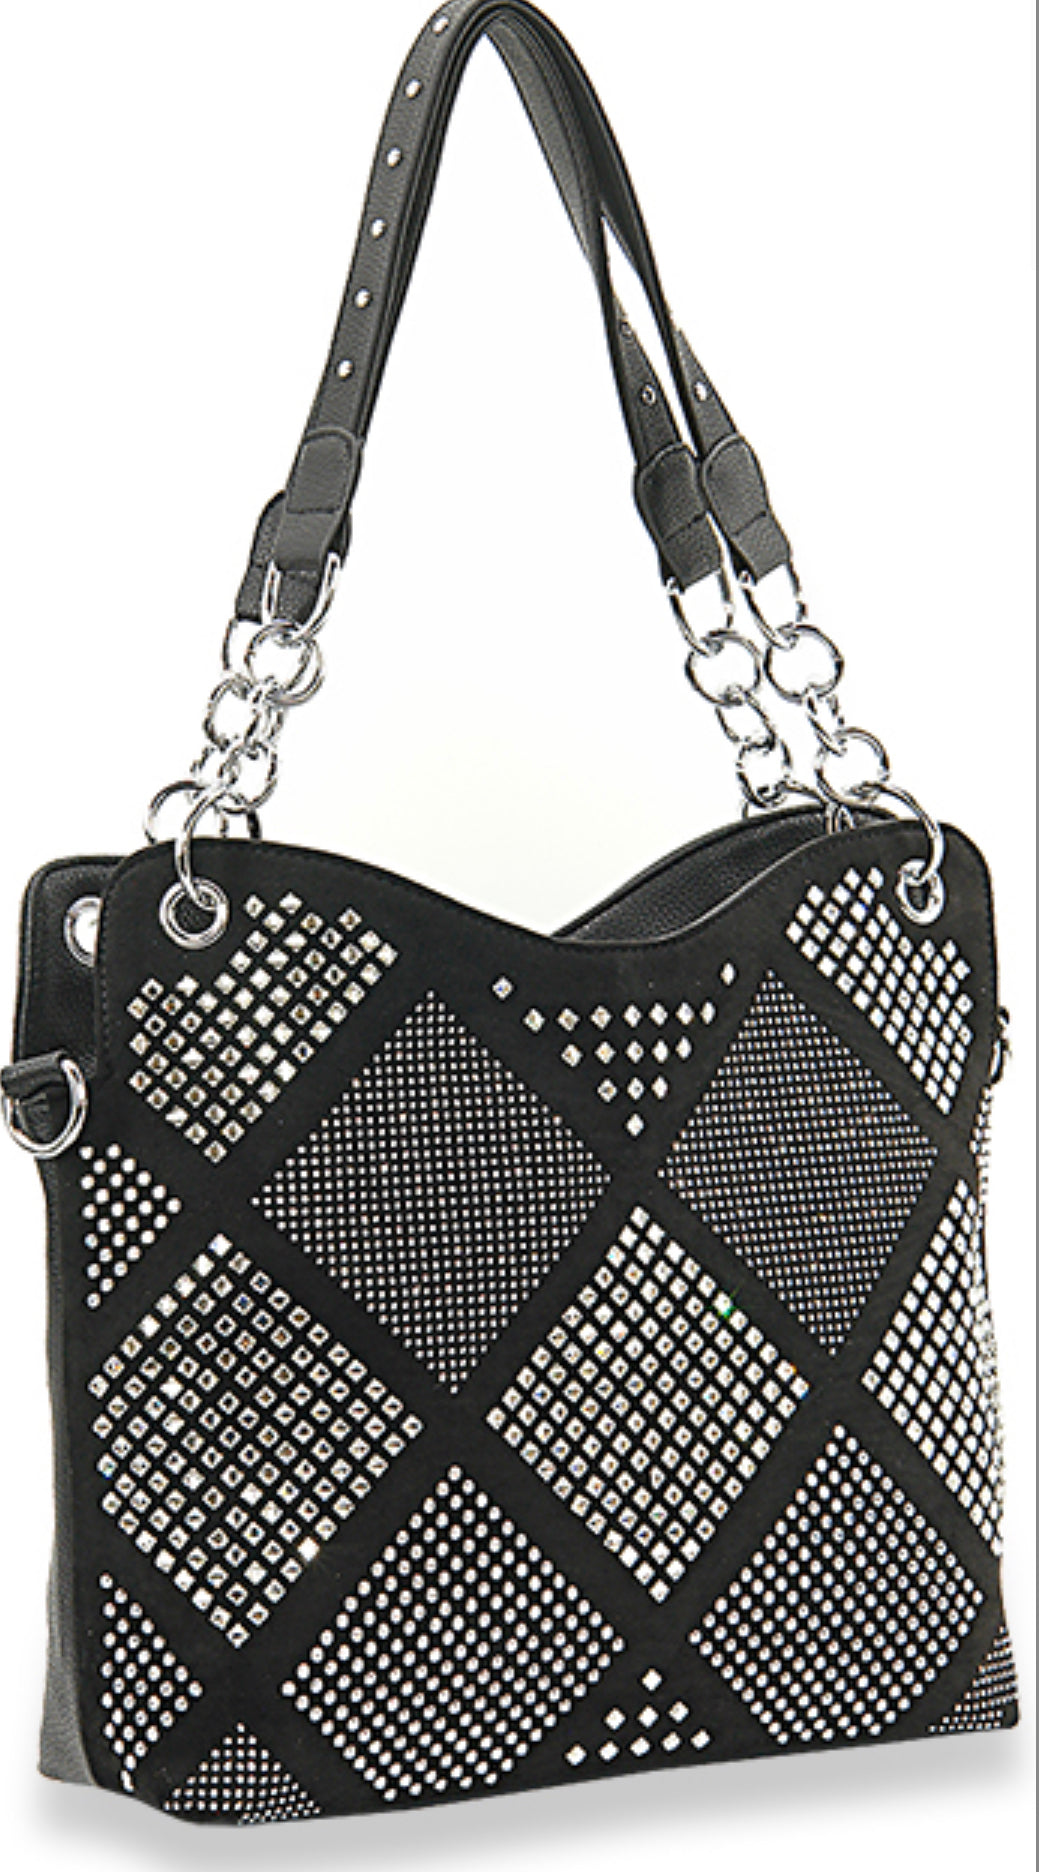 Black diamond pattern purse